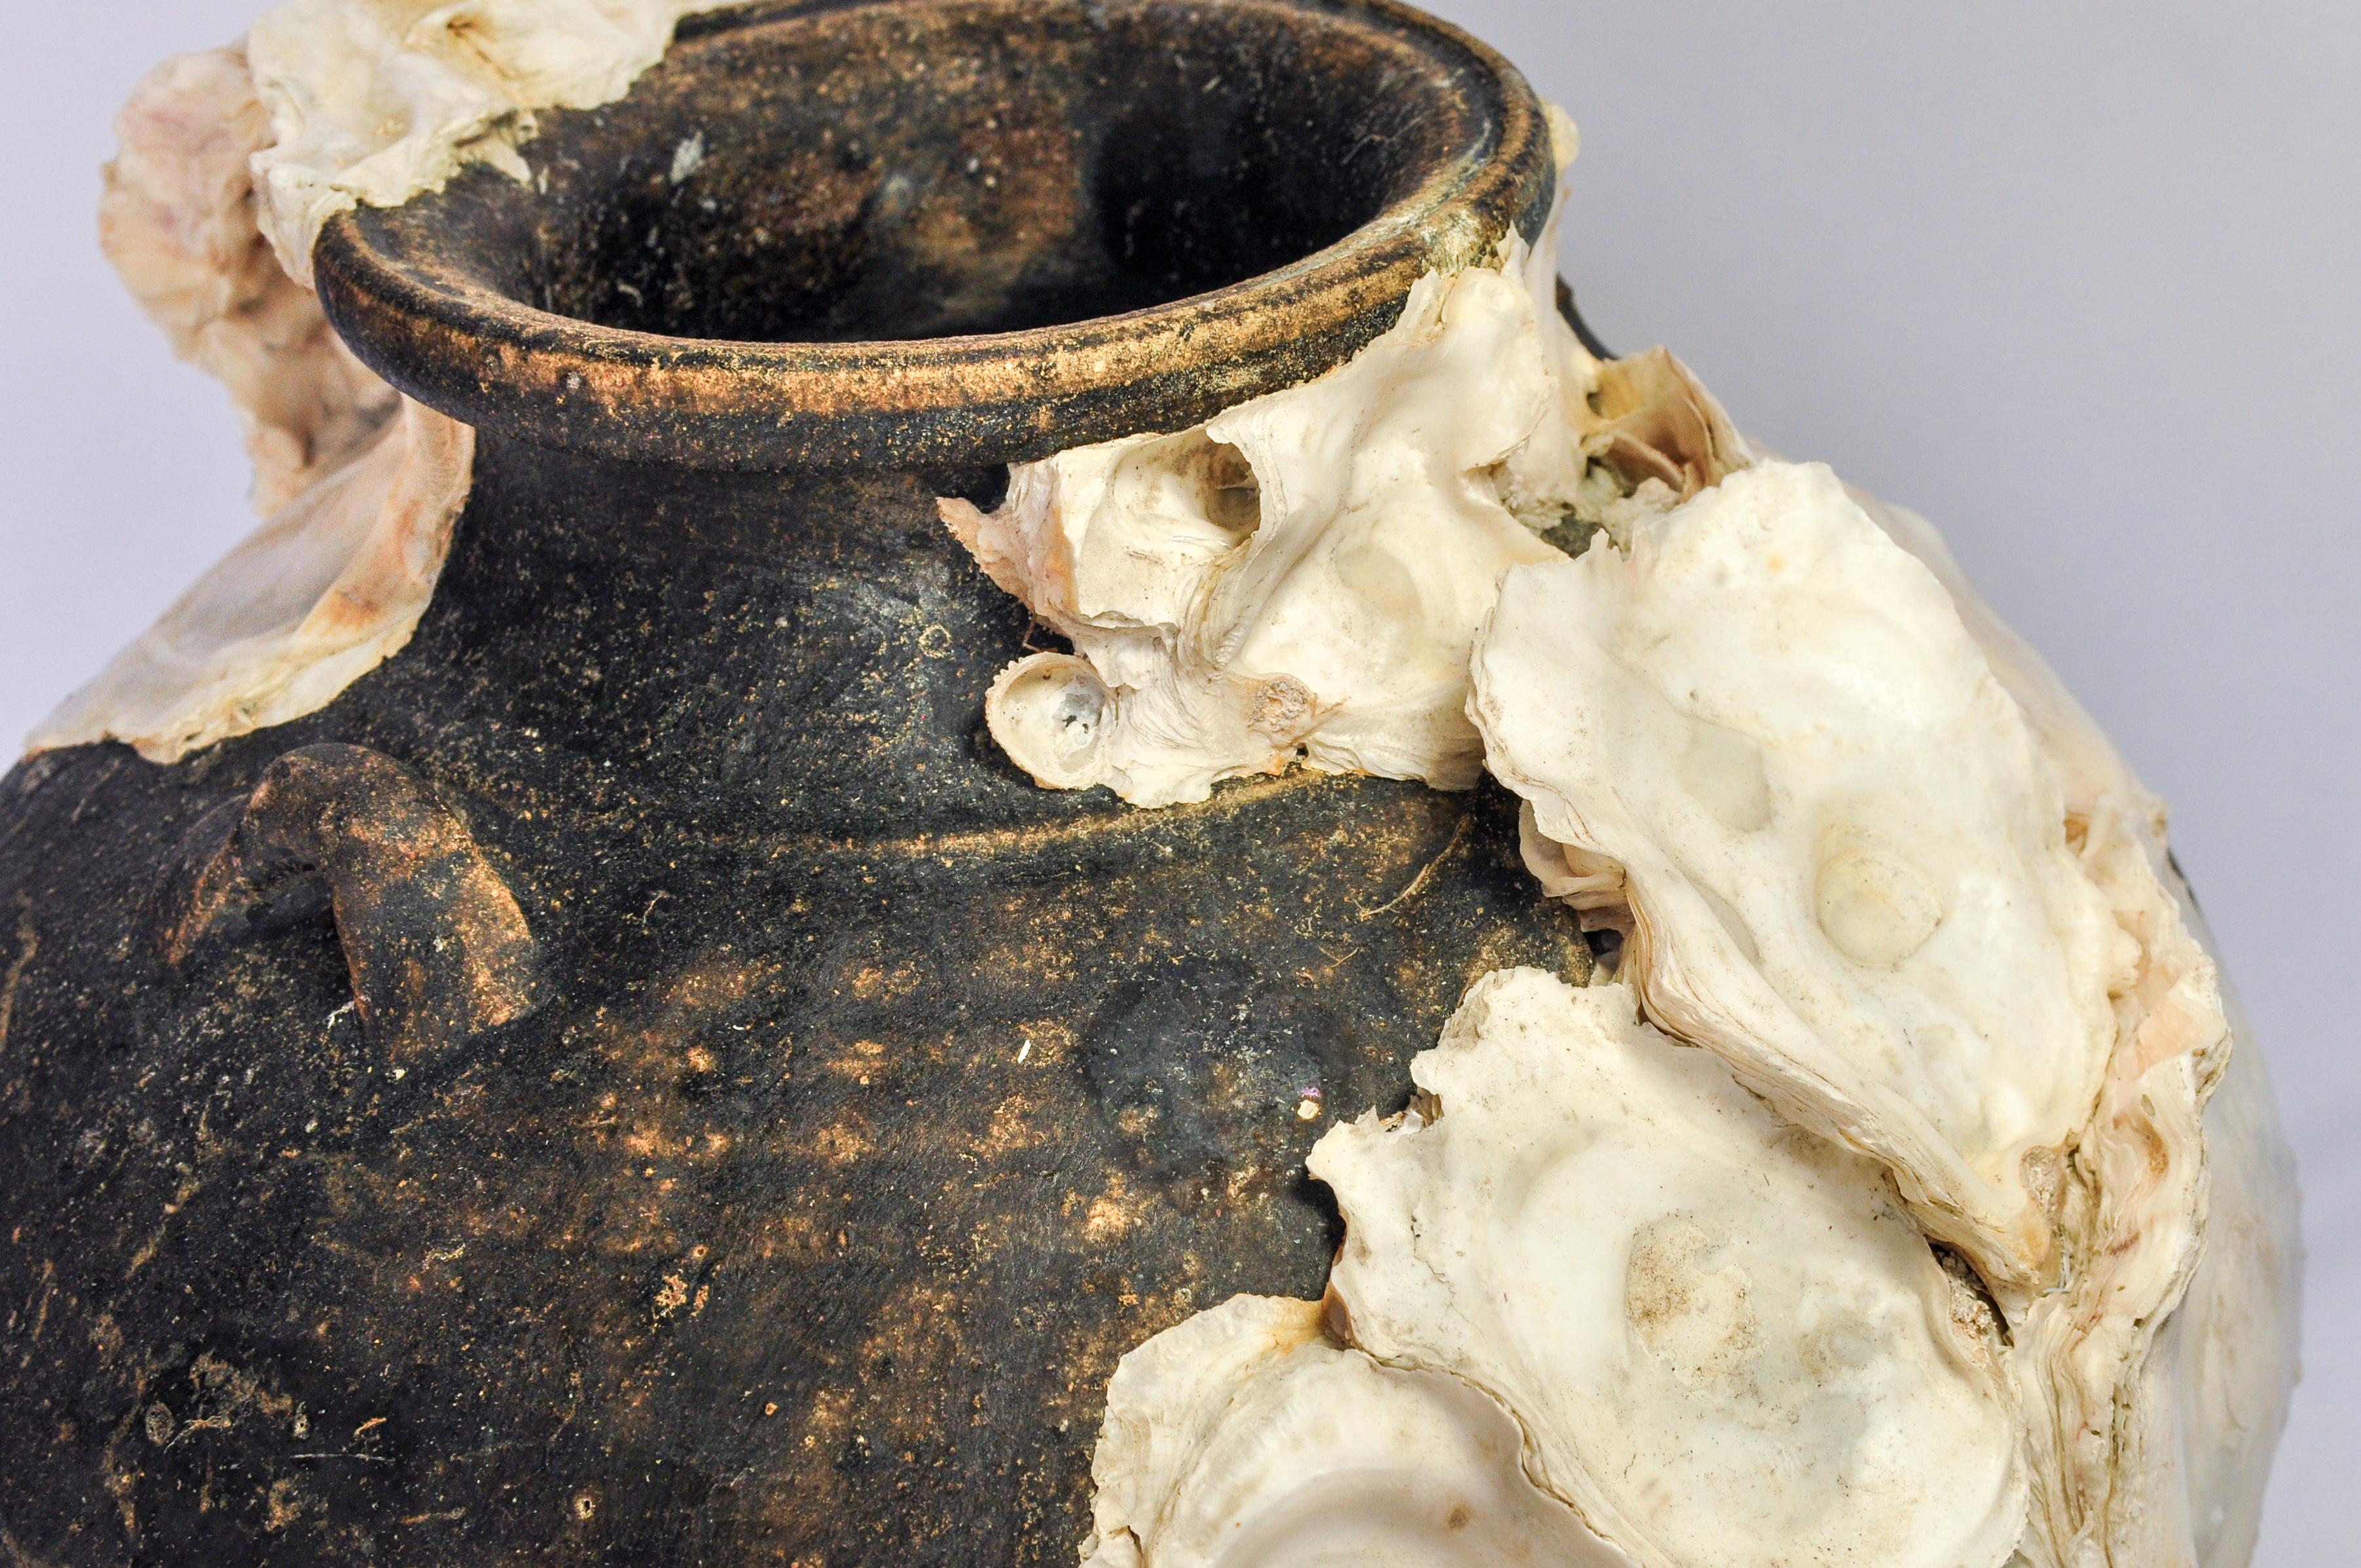 Large Antique Ceramic Jar with Encrustations 15